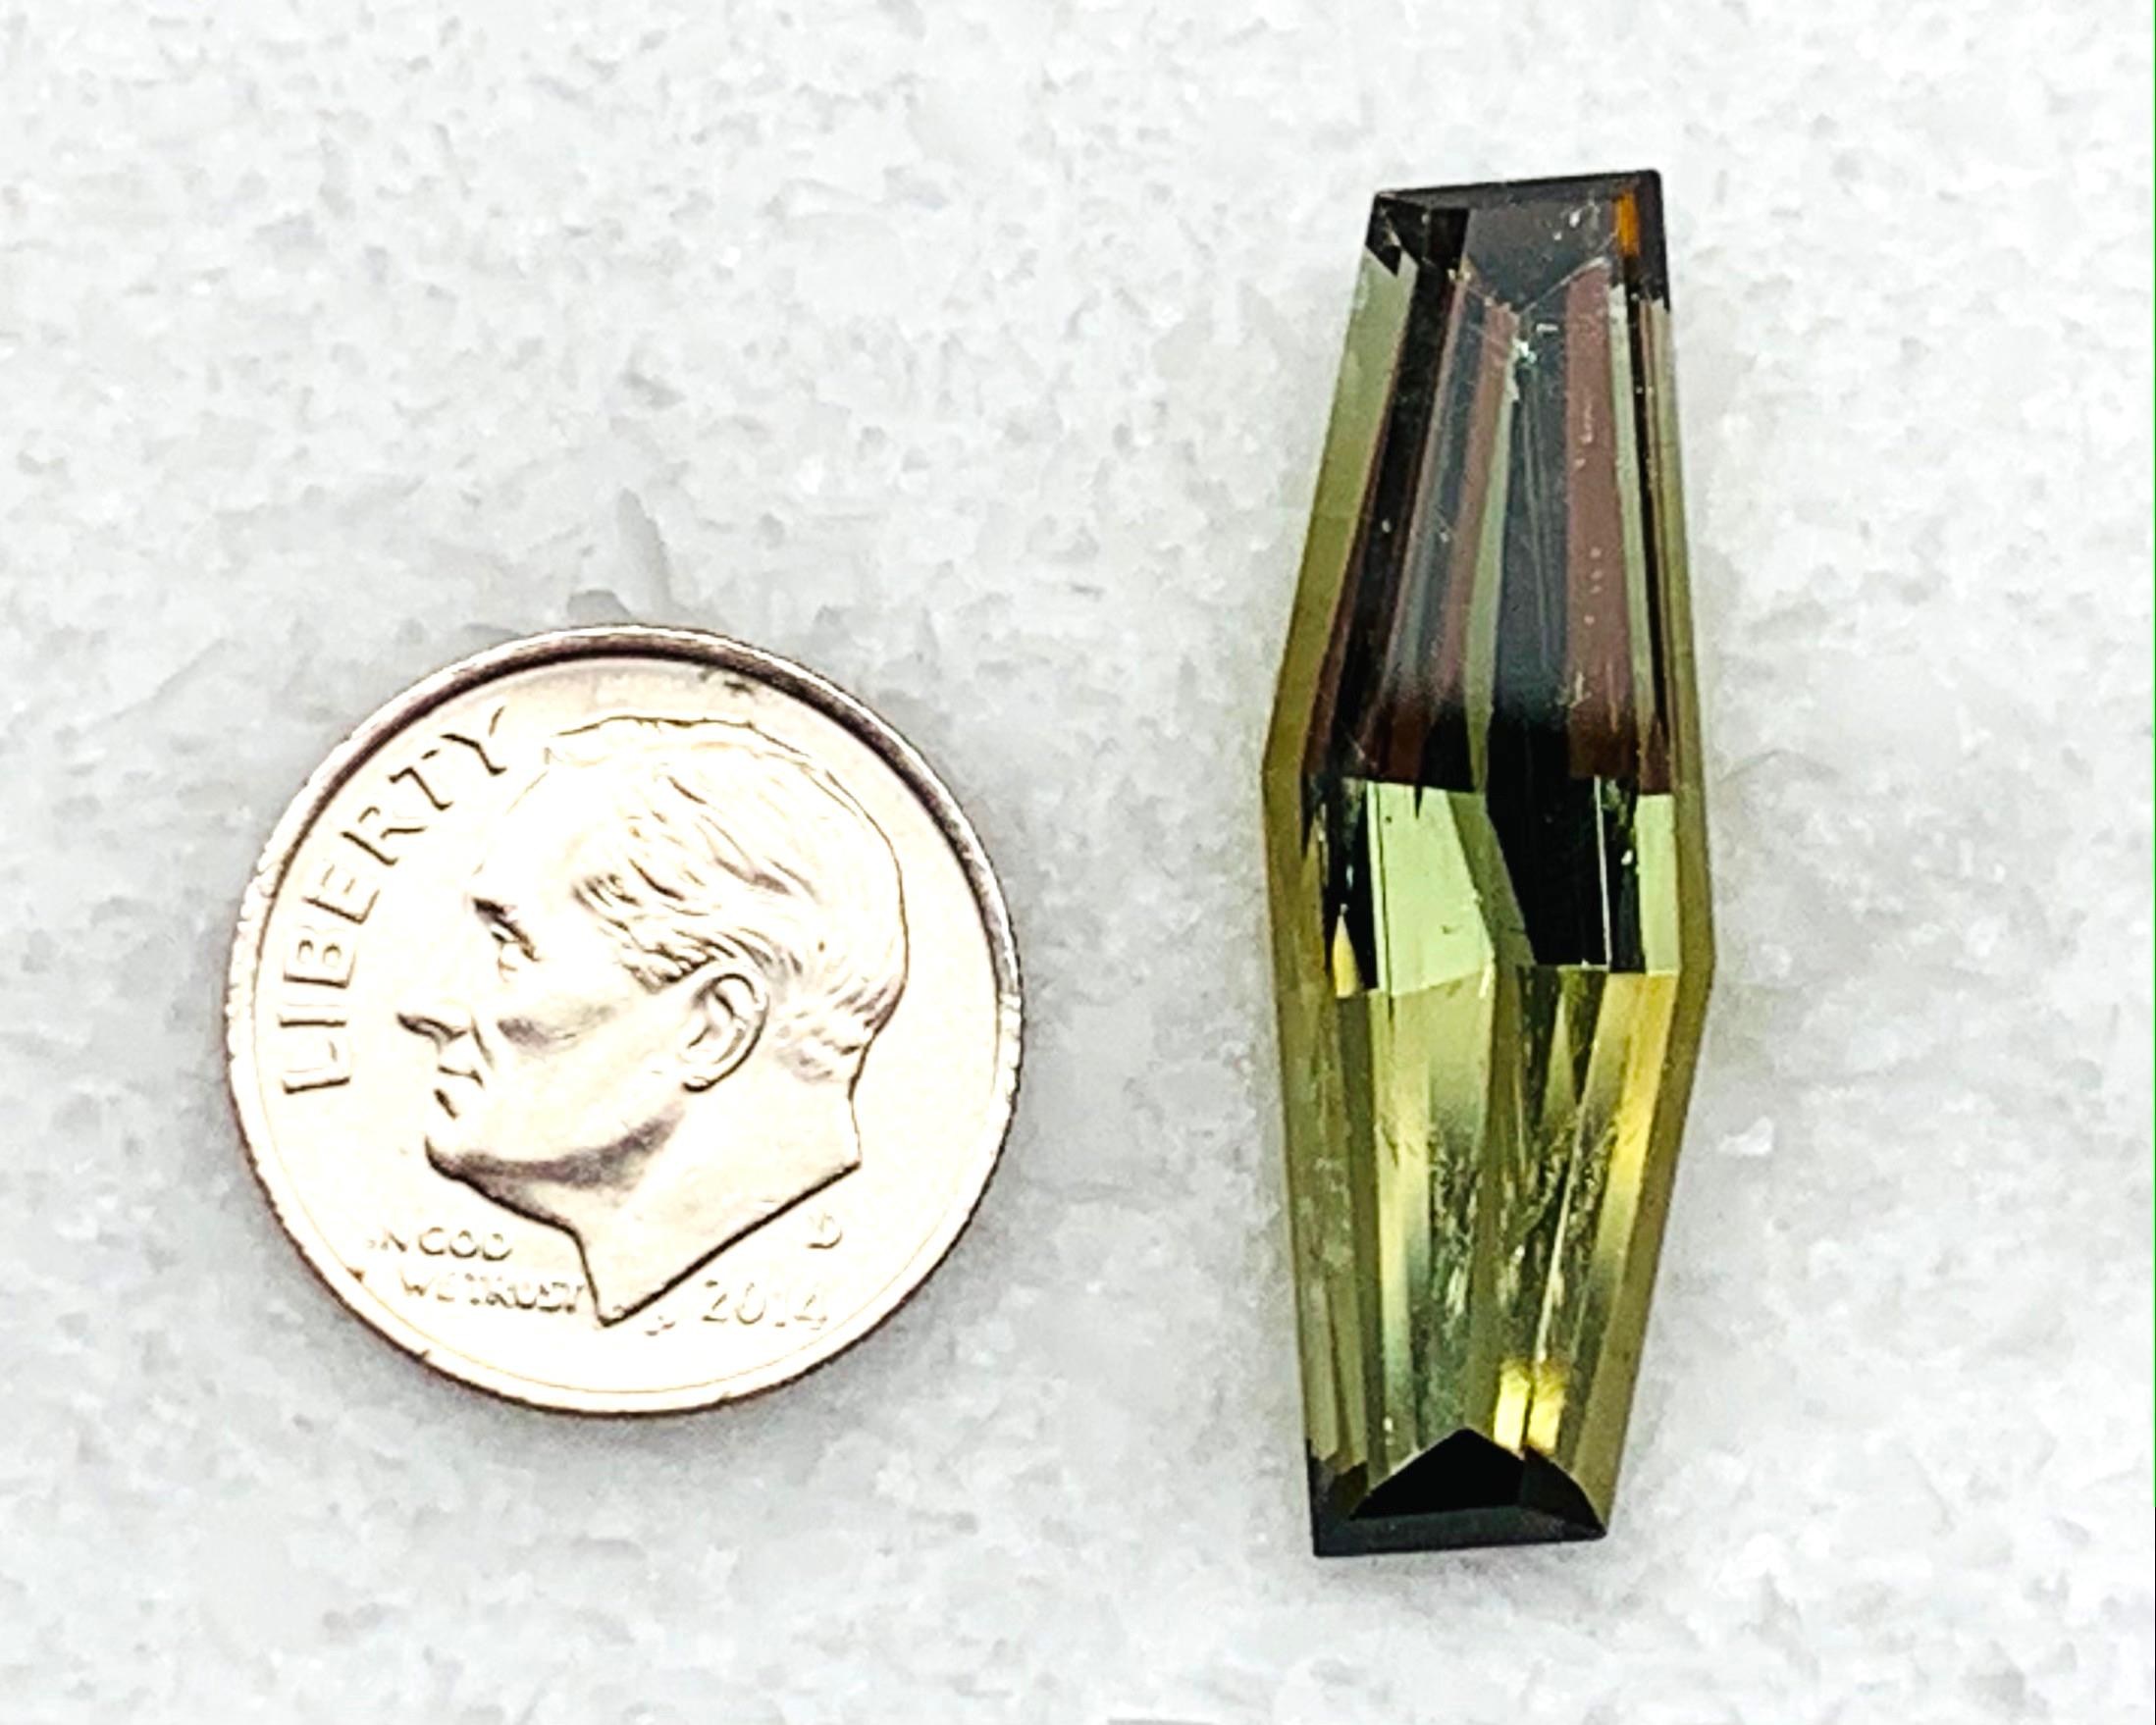 Tourmaline bicolore fantaisie tourmaline hexagonale allongée 15,50 carats non sertie, pierre précieuse pour pendentif en vente 5